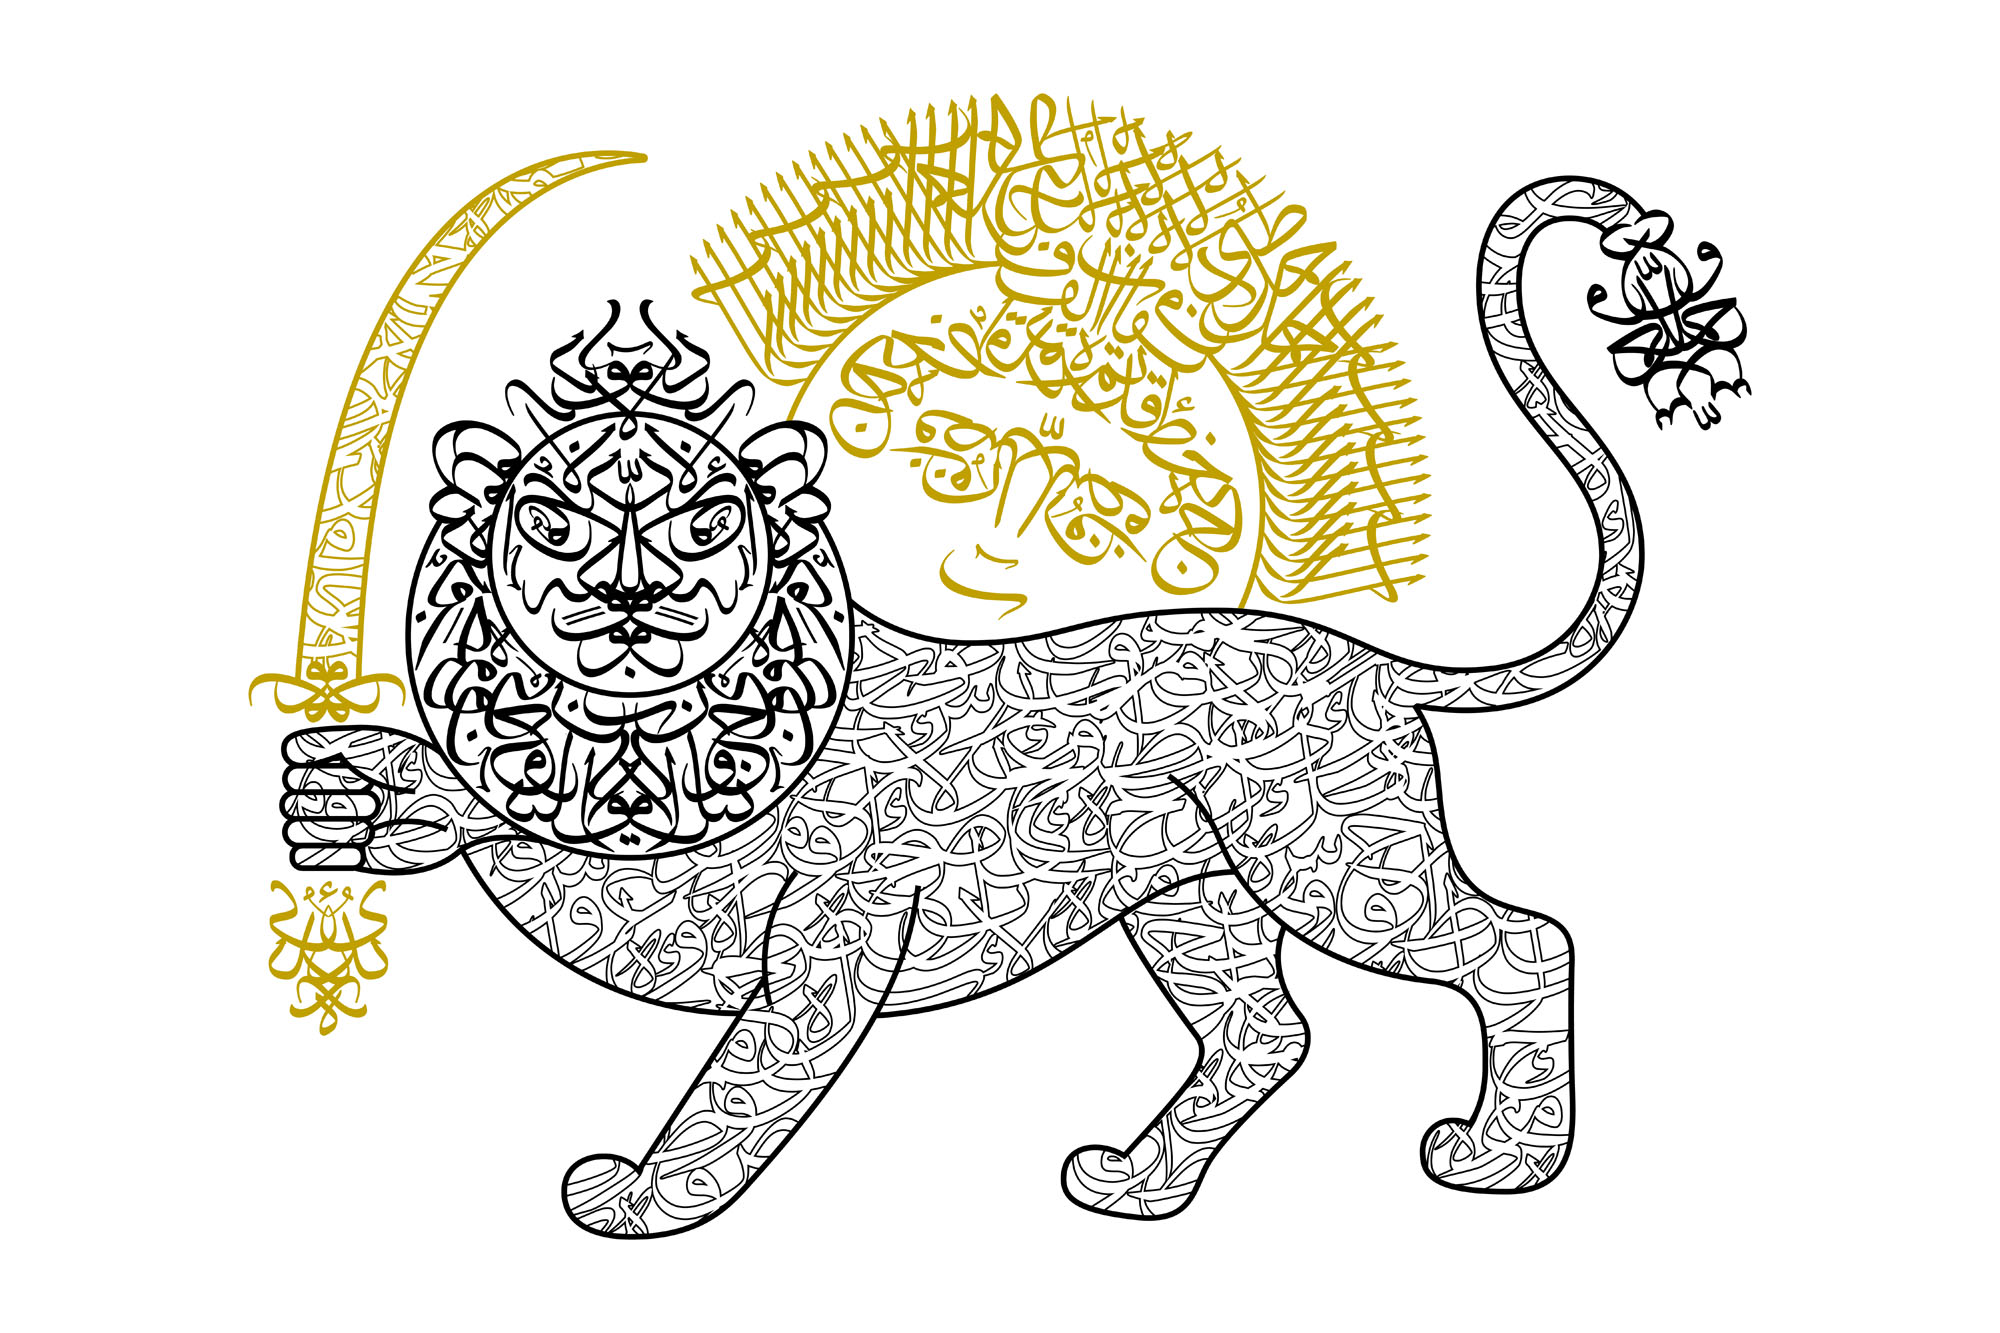 "Lion and Sun," a screen print on cotton rag paper by Iranian artist Kourosh Beigpour